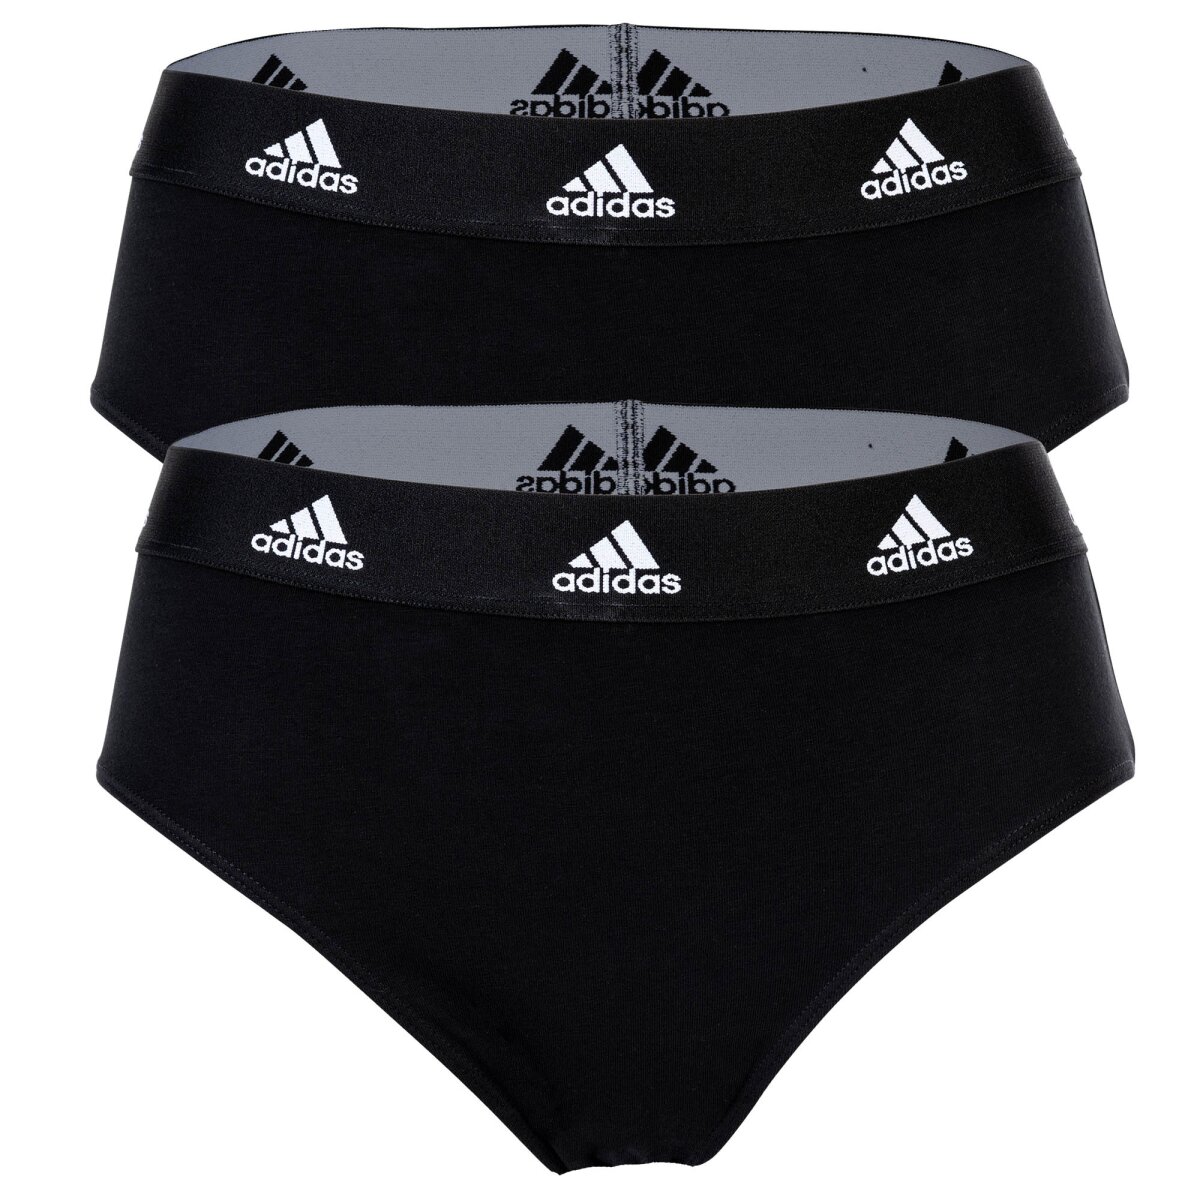 adidas Sports Underwear Bikini Bottom Women - 2 Pack - 908